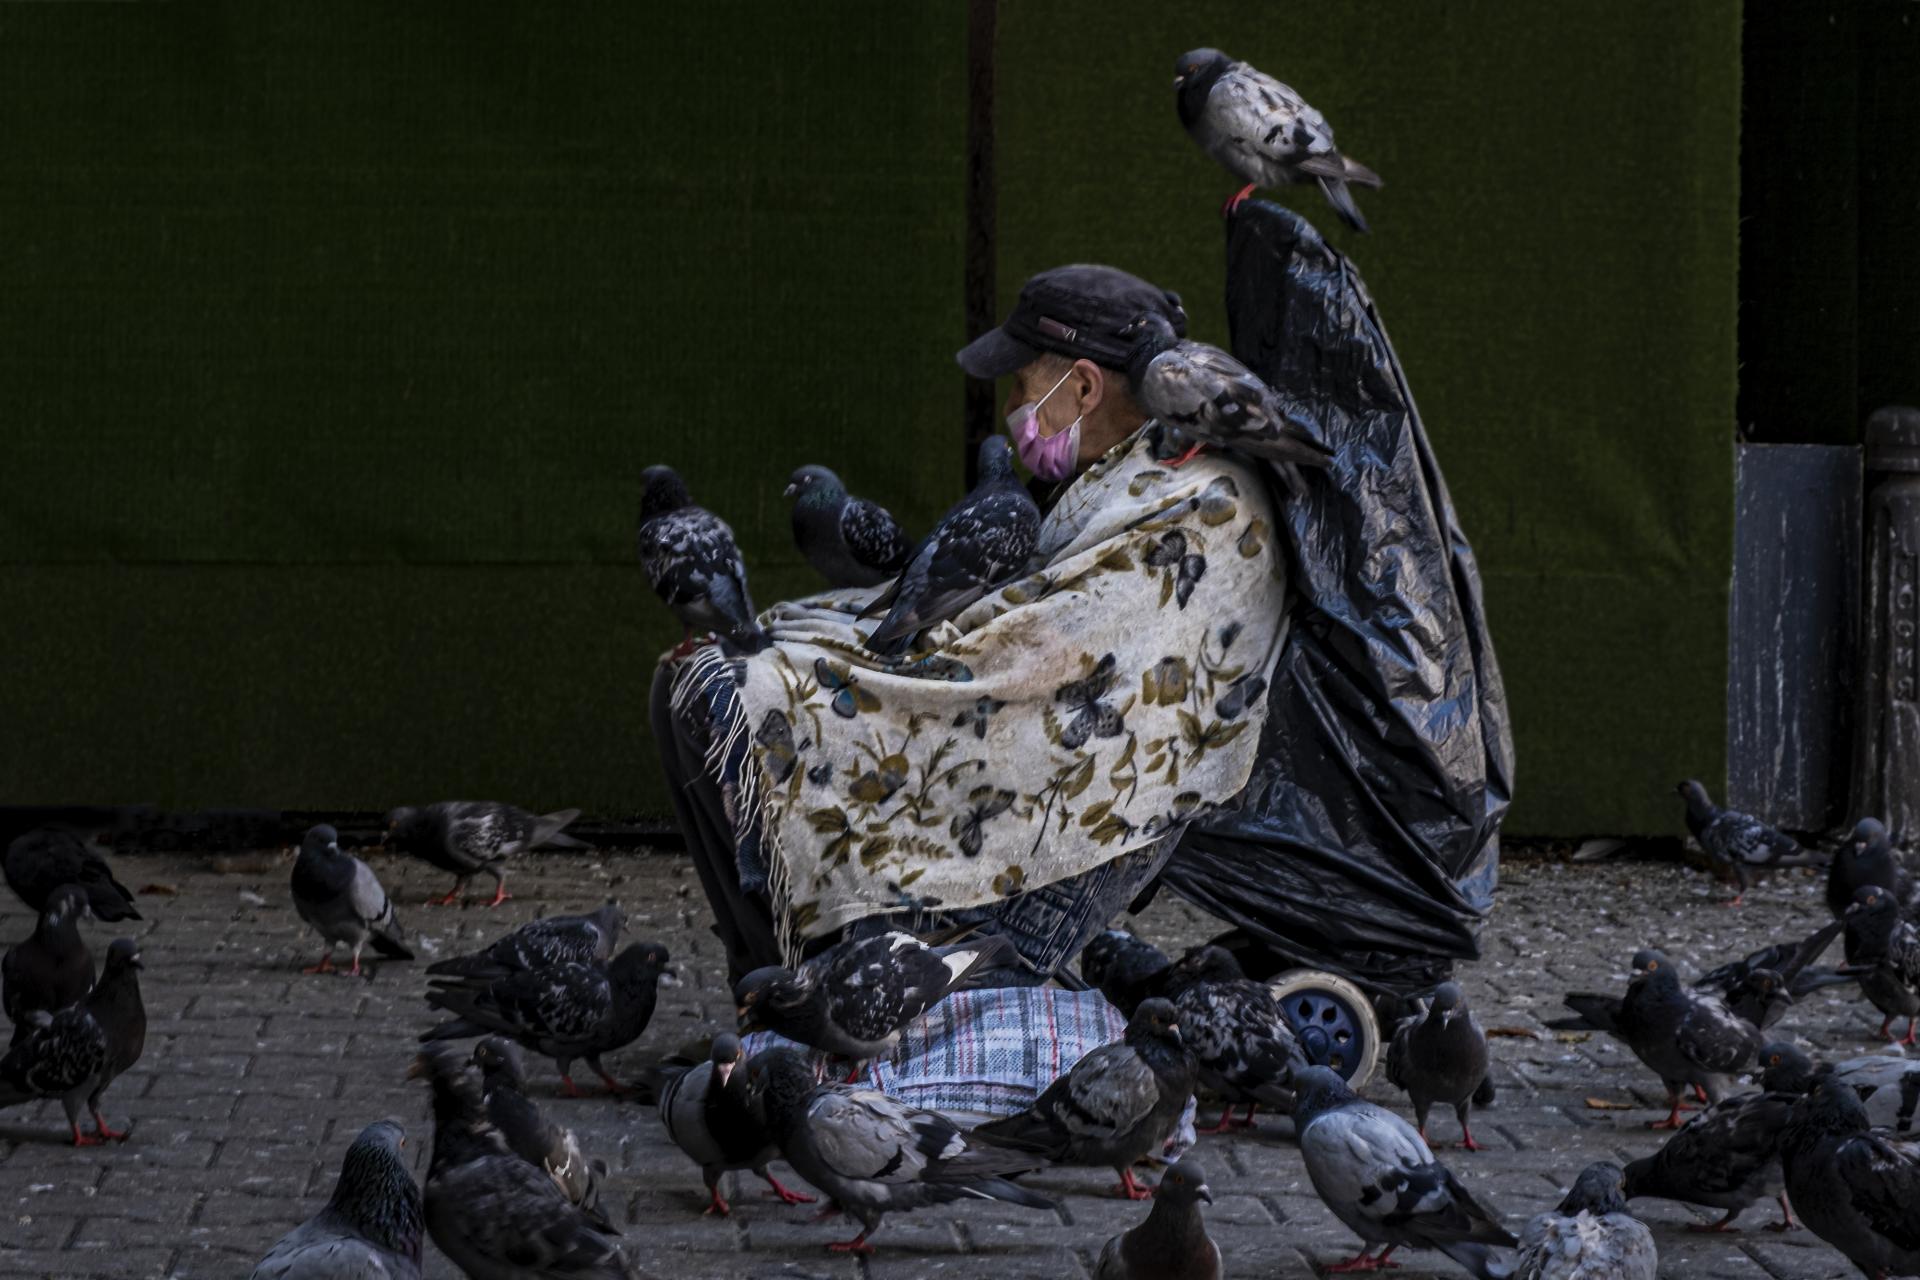 New York Photography Awards Winner - Queen of pigeons